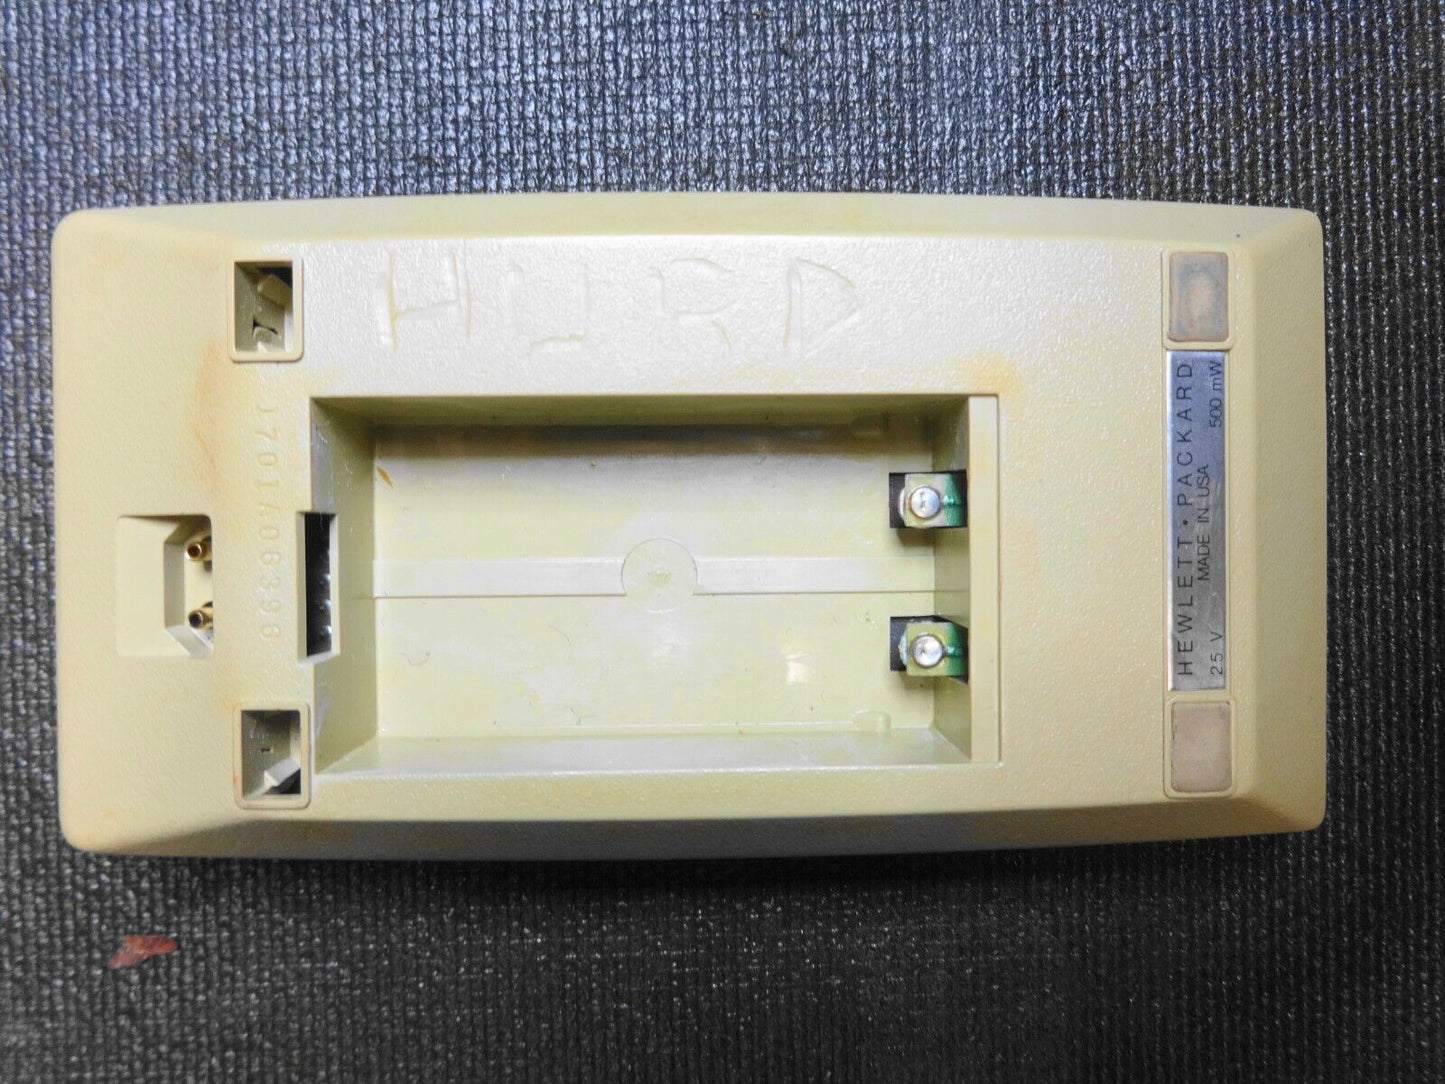 Vintage 1978 Hewlett Packard HP 22 Financial Calculator w/ Case - Powers On